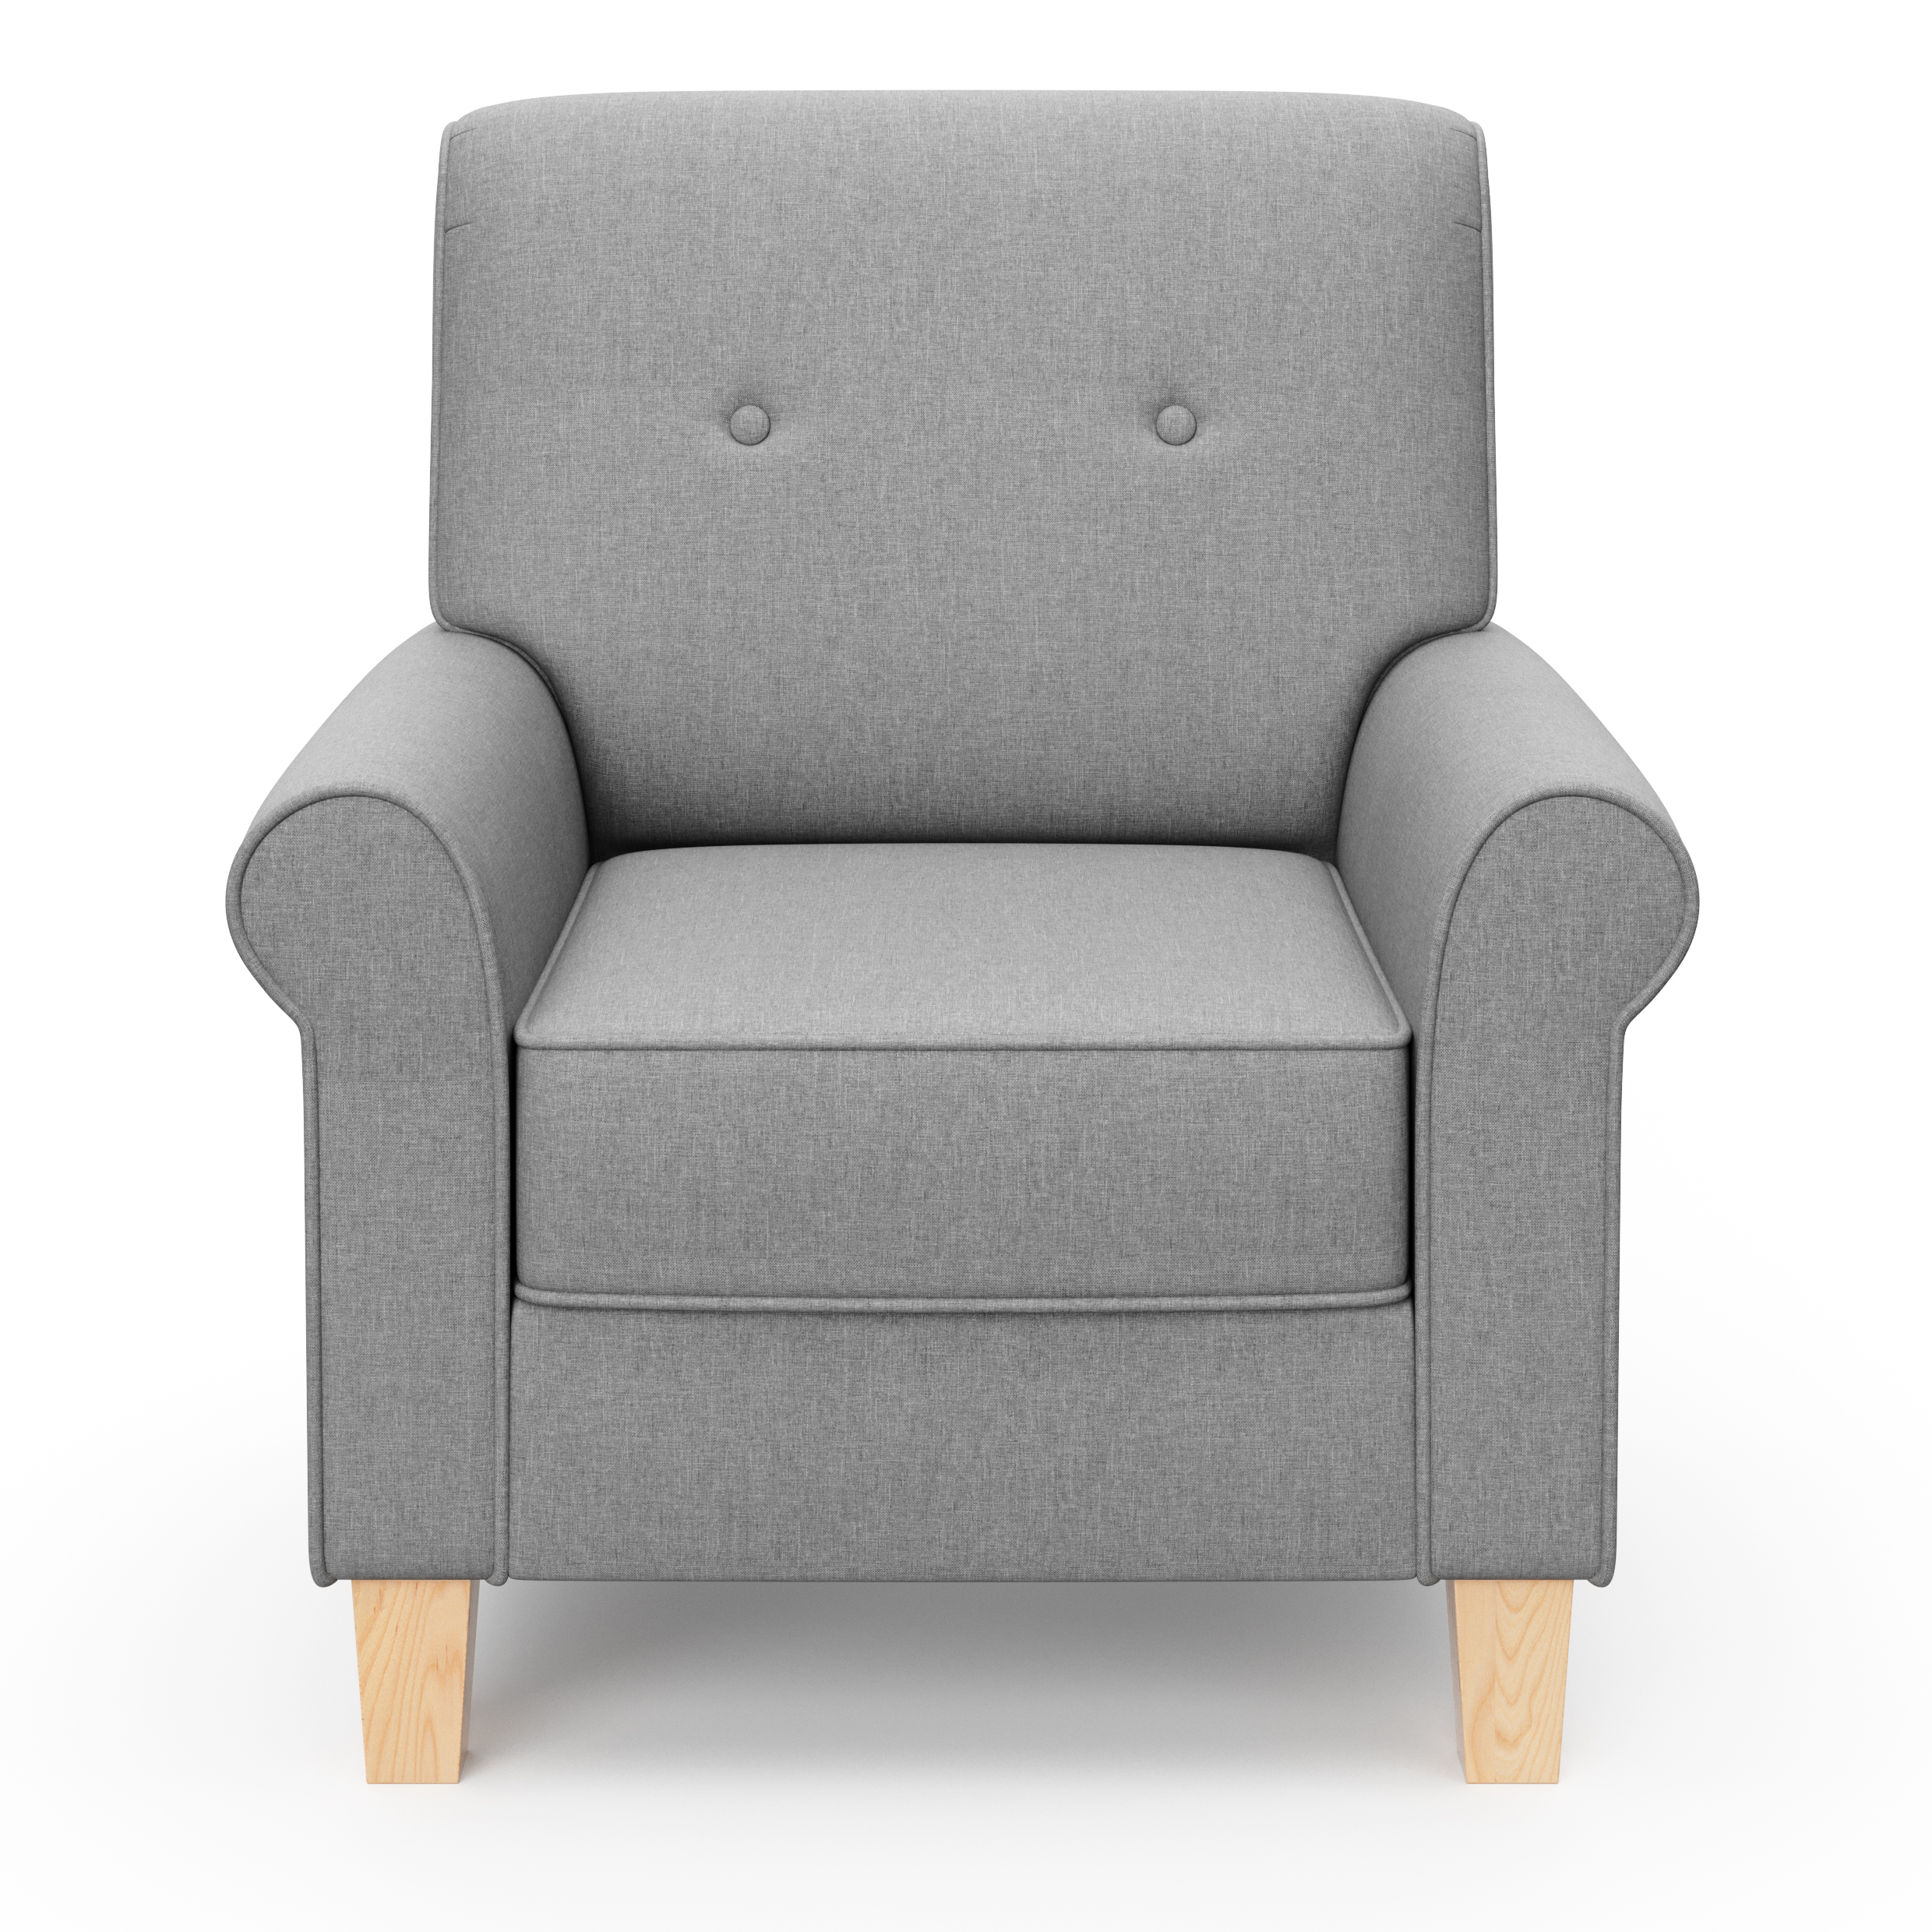 Graco Harper Poly-Linen Indoor Nursery Rocking Chair, Horizon Gray - image 5 of 6